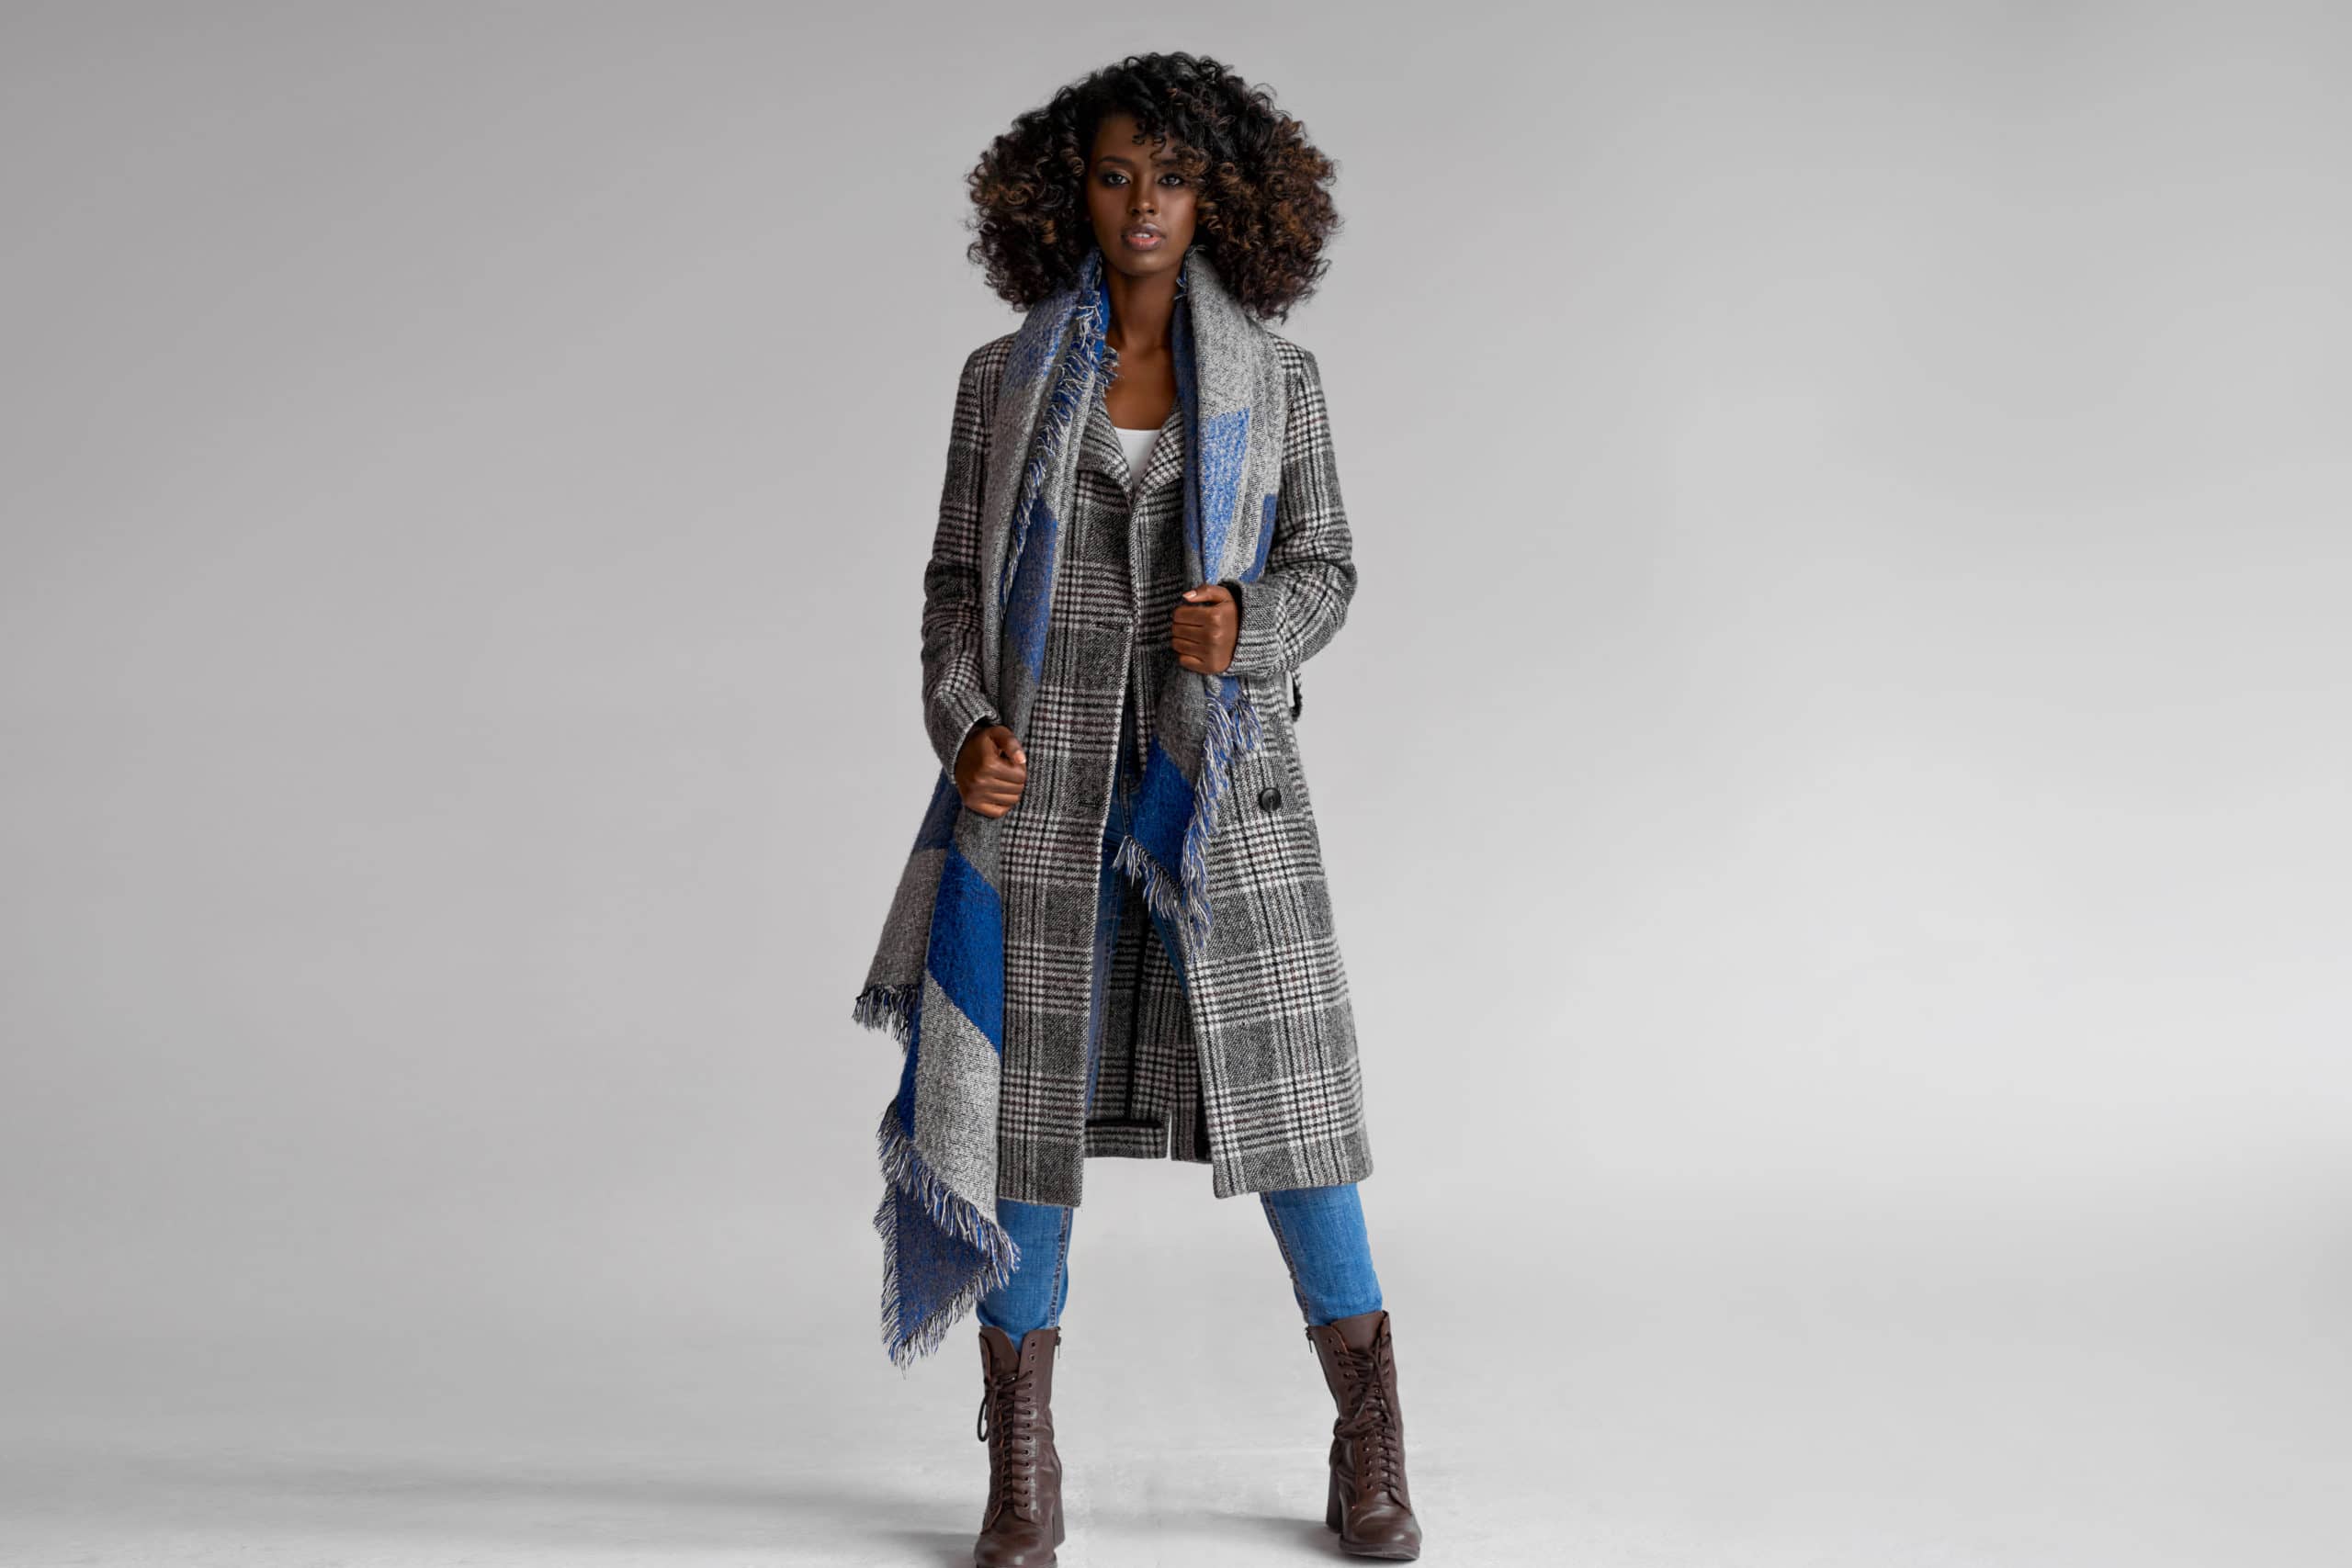 Female,black,model,wear,grey,plaid,coat,with,scarf,with